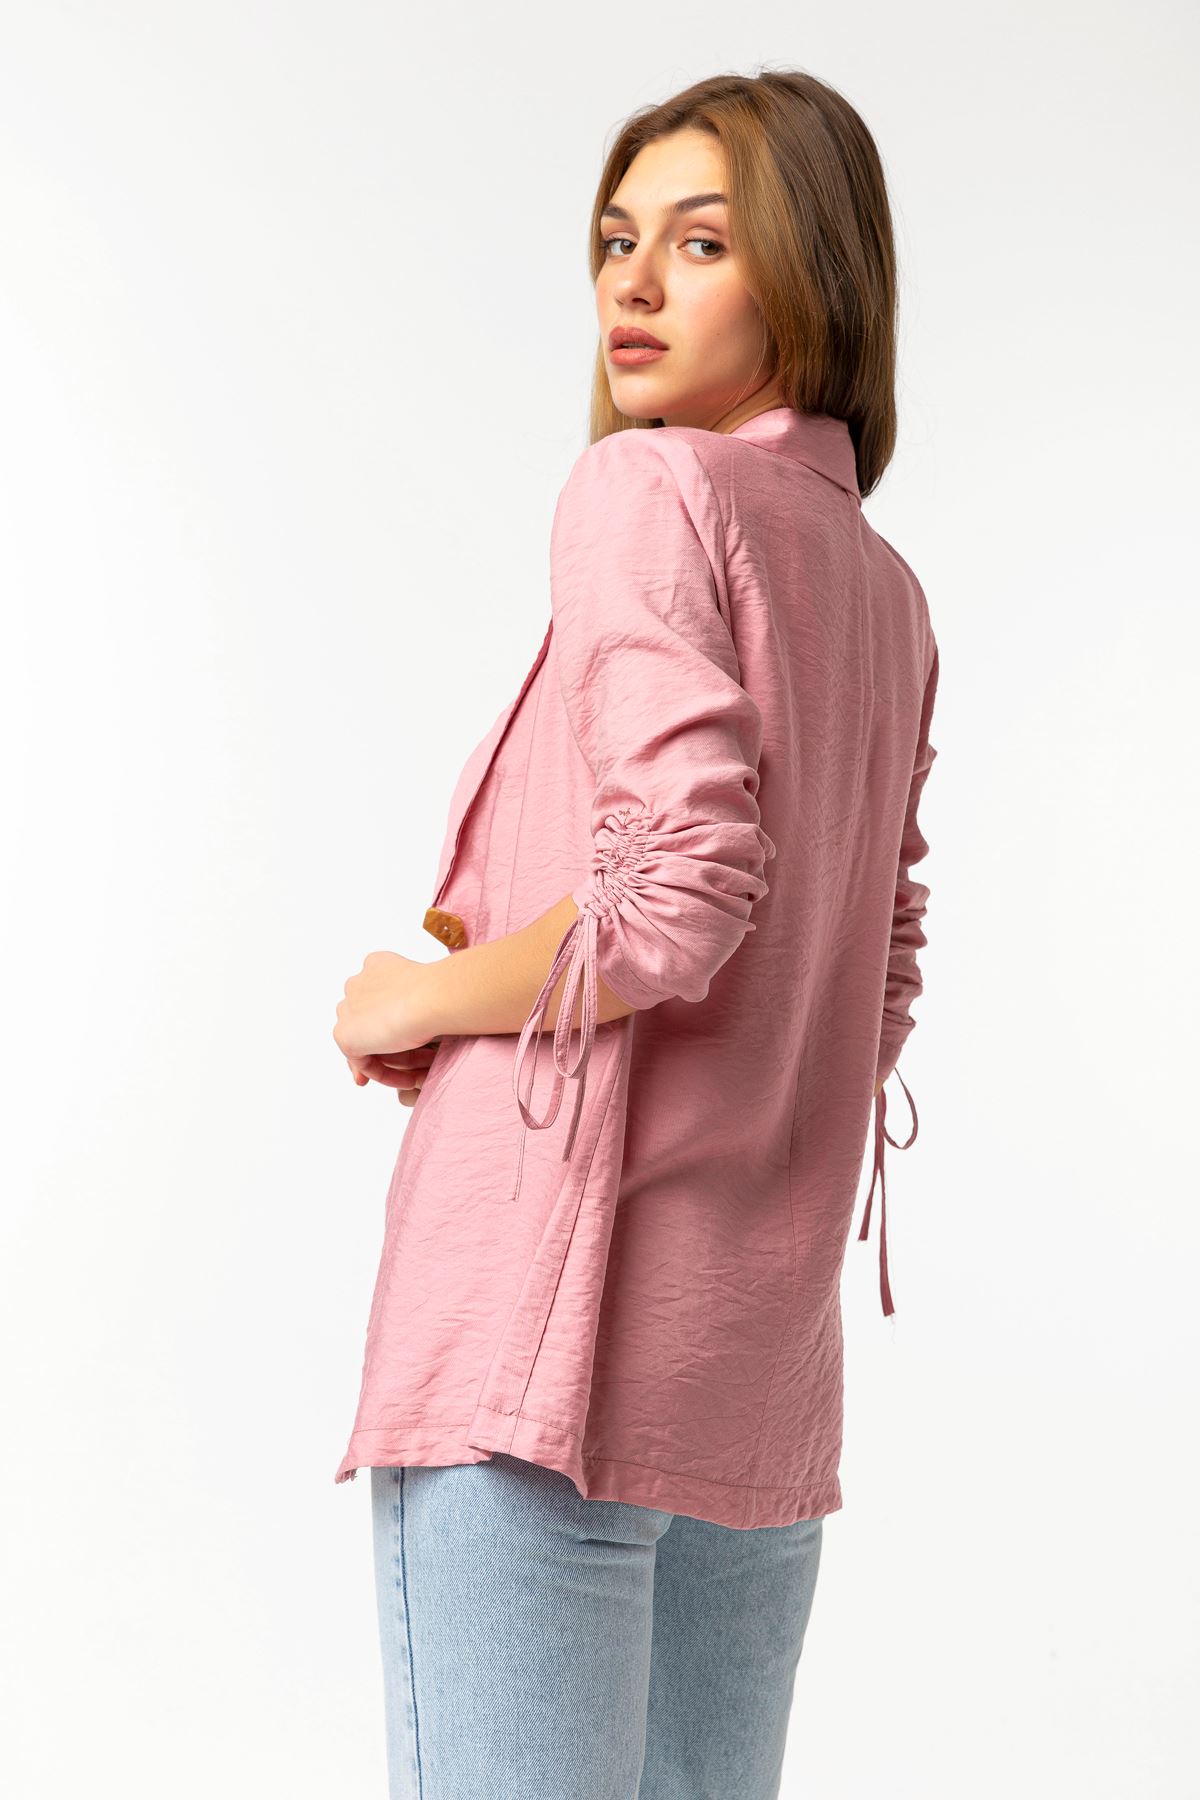 Aerobin Fabric Revere Collar Hip Height Comfy Women Jacket - Light Pink